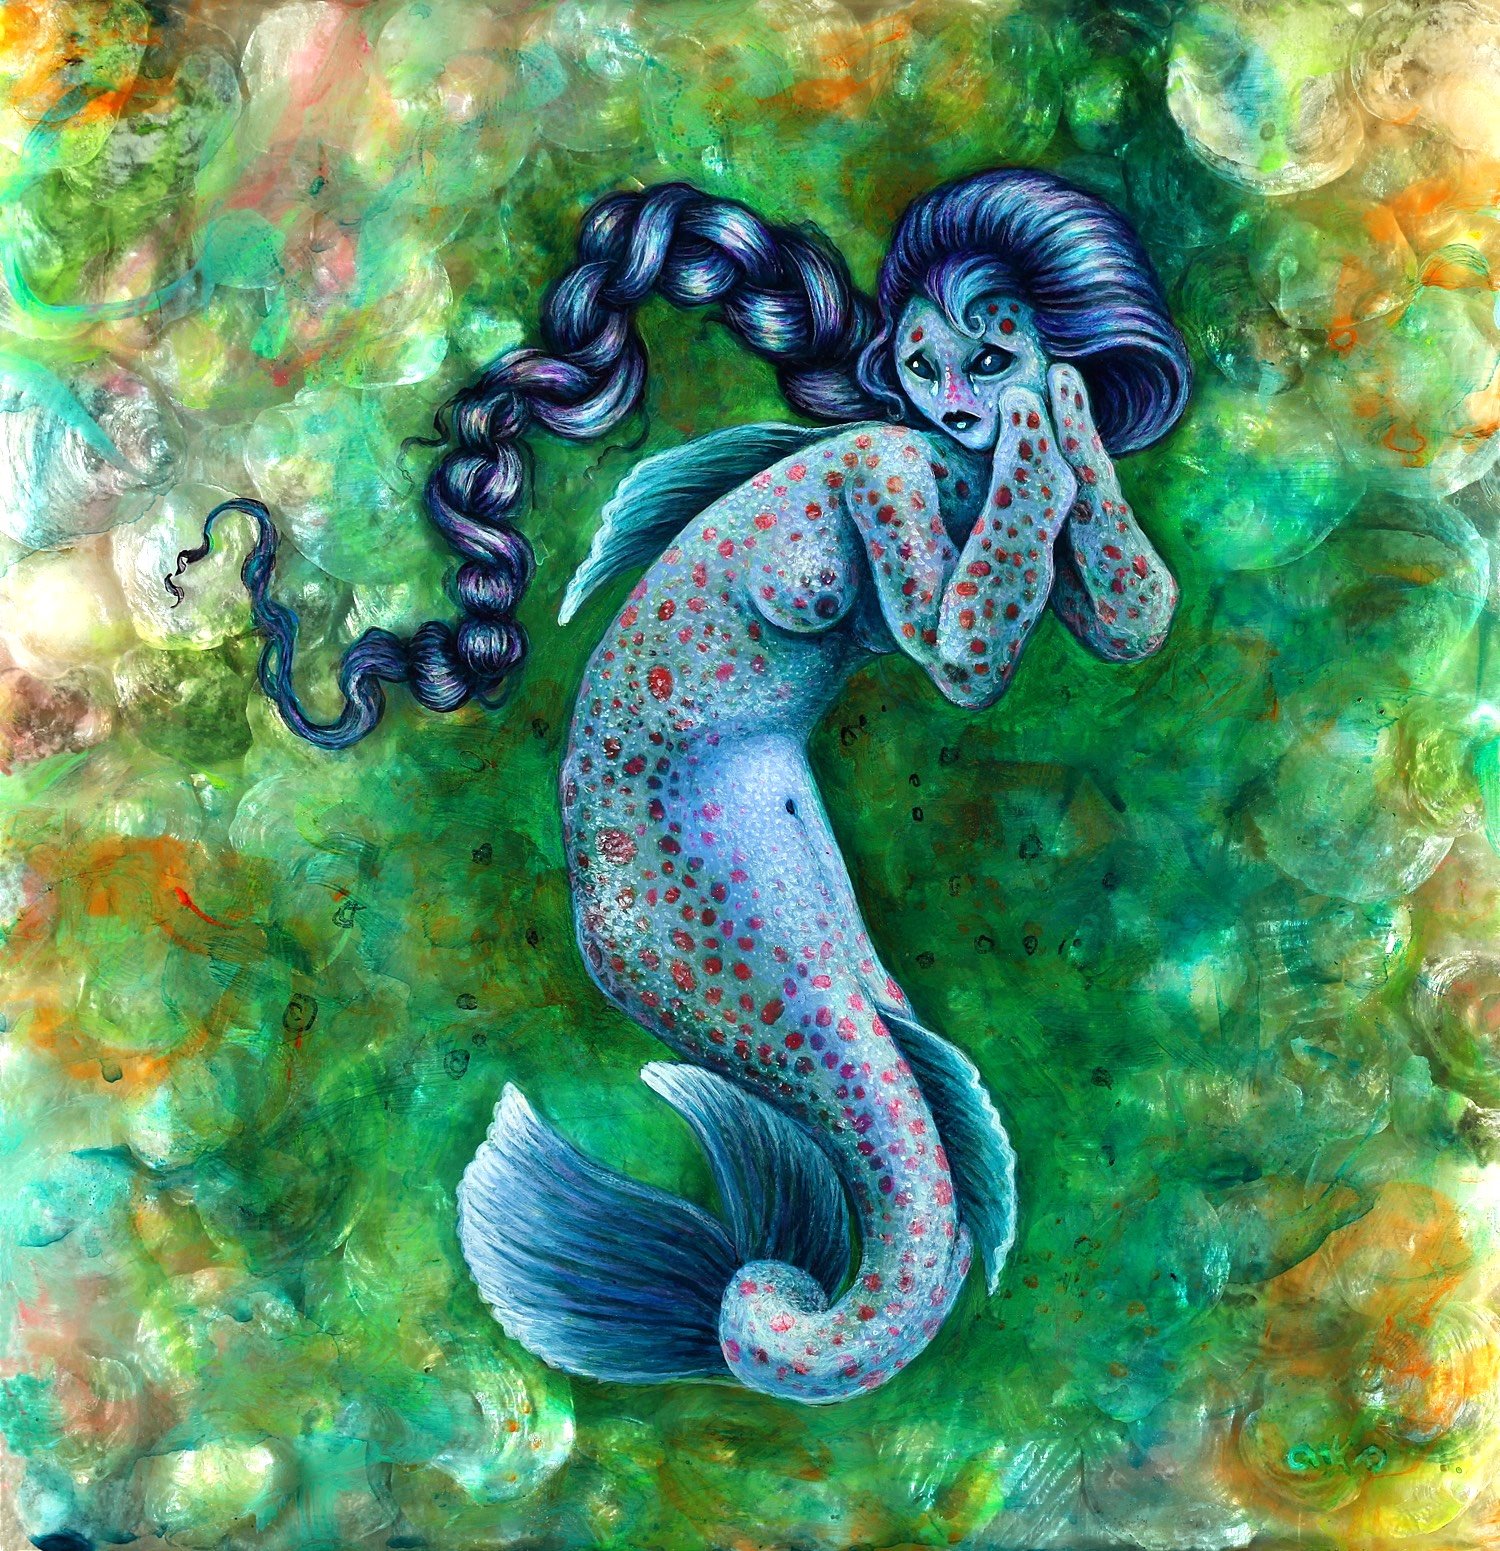 Mermaid Tears